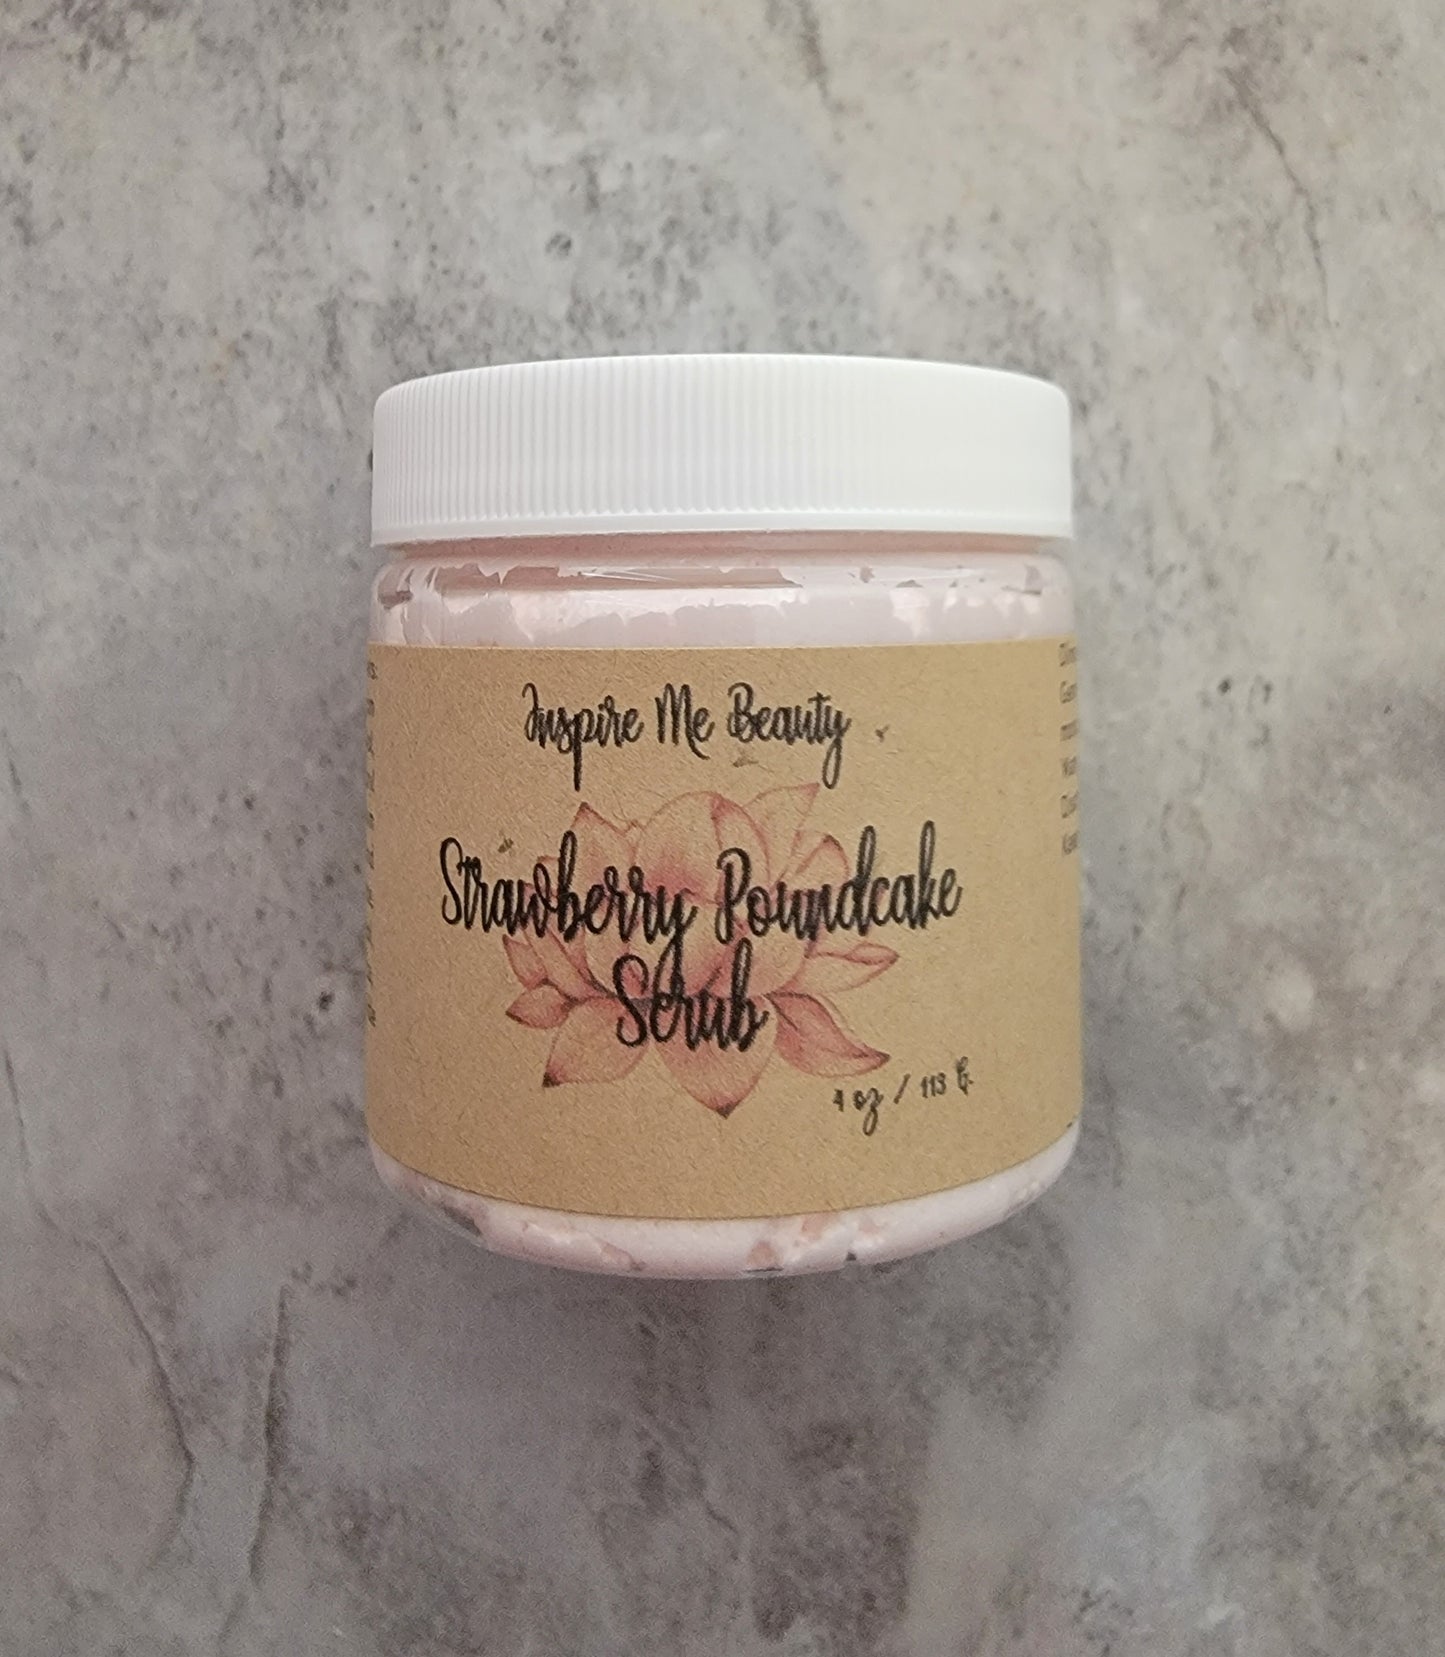 Strawberry Poundcake Soap Scrub by Inspire Me Beauty